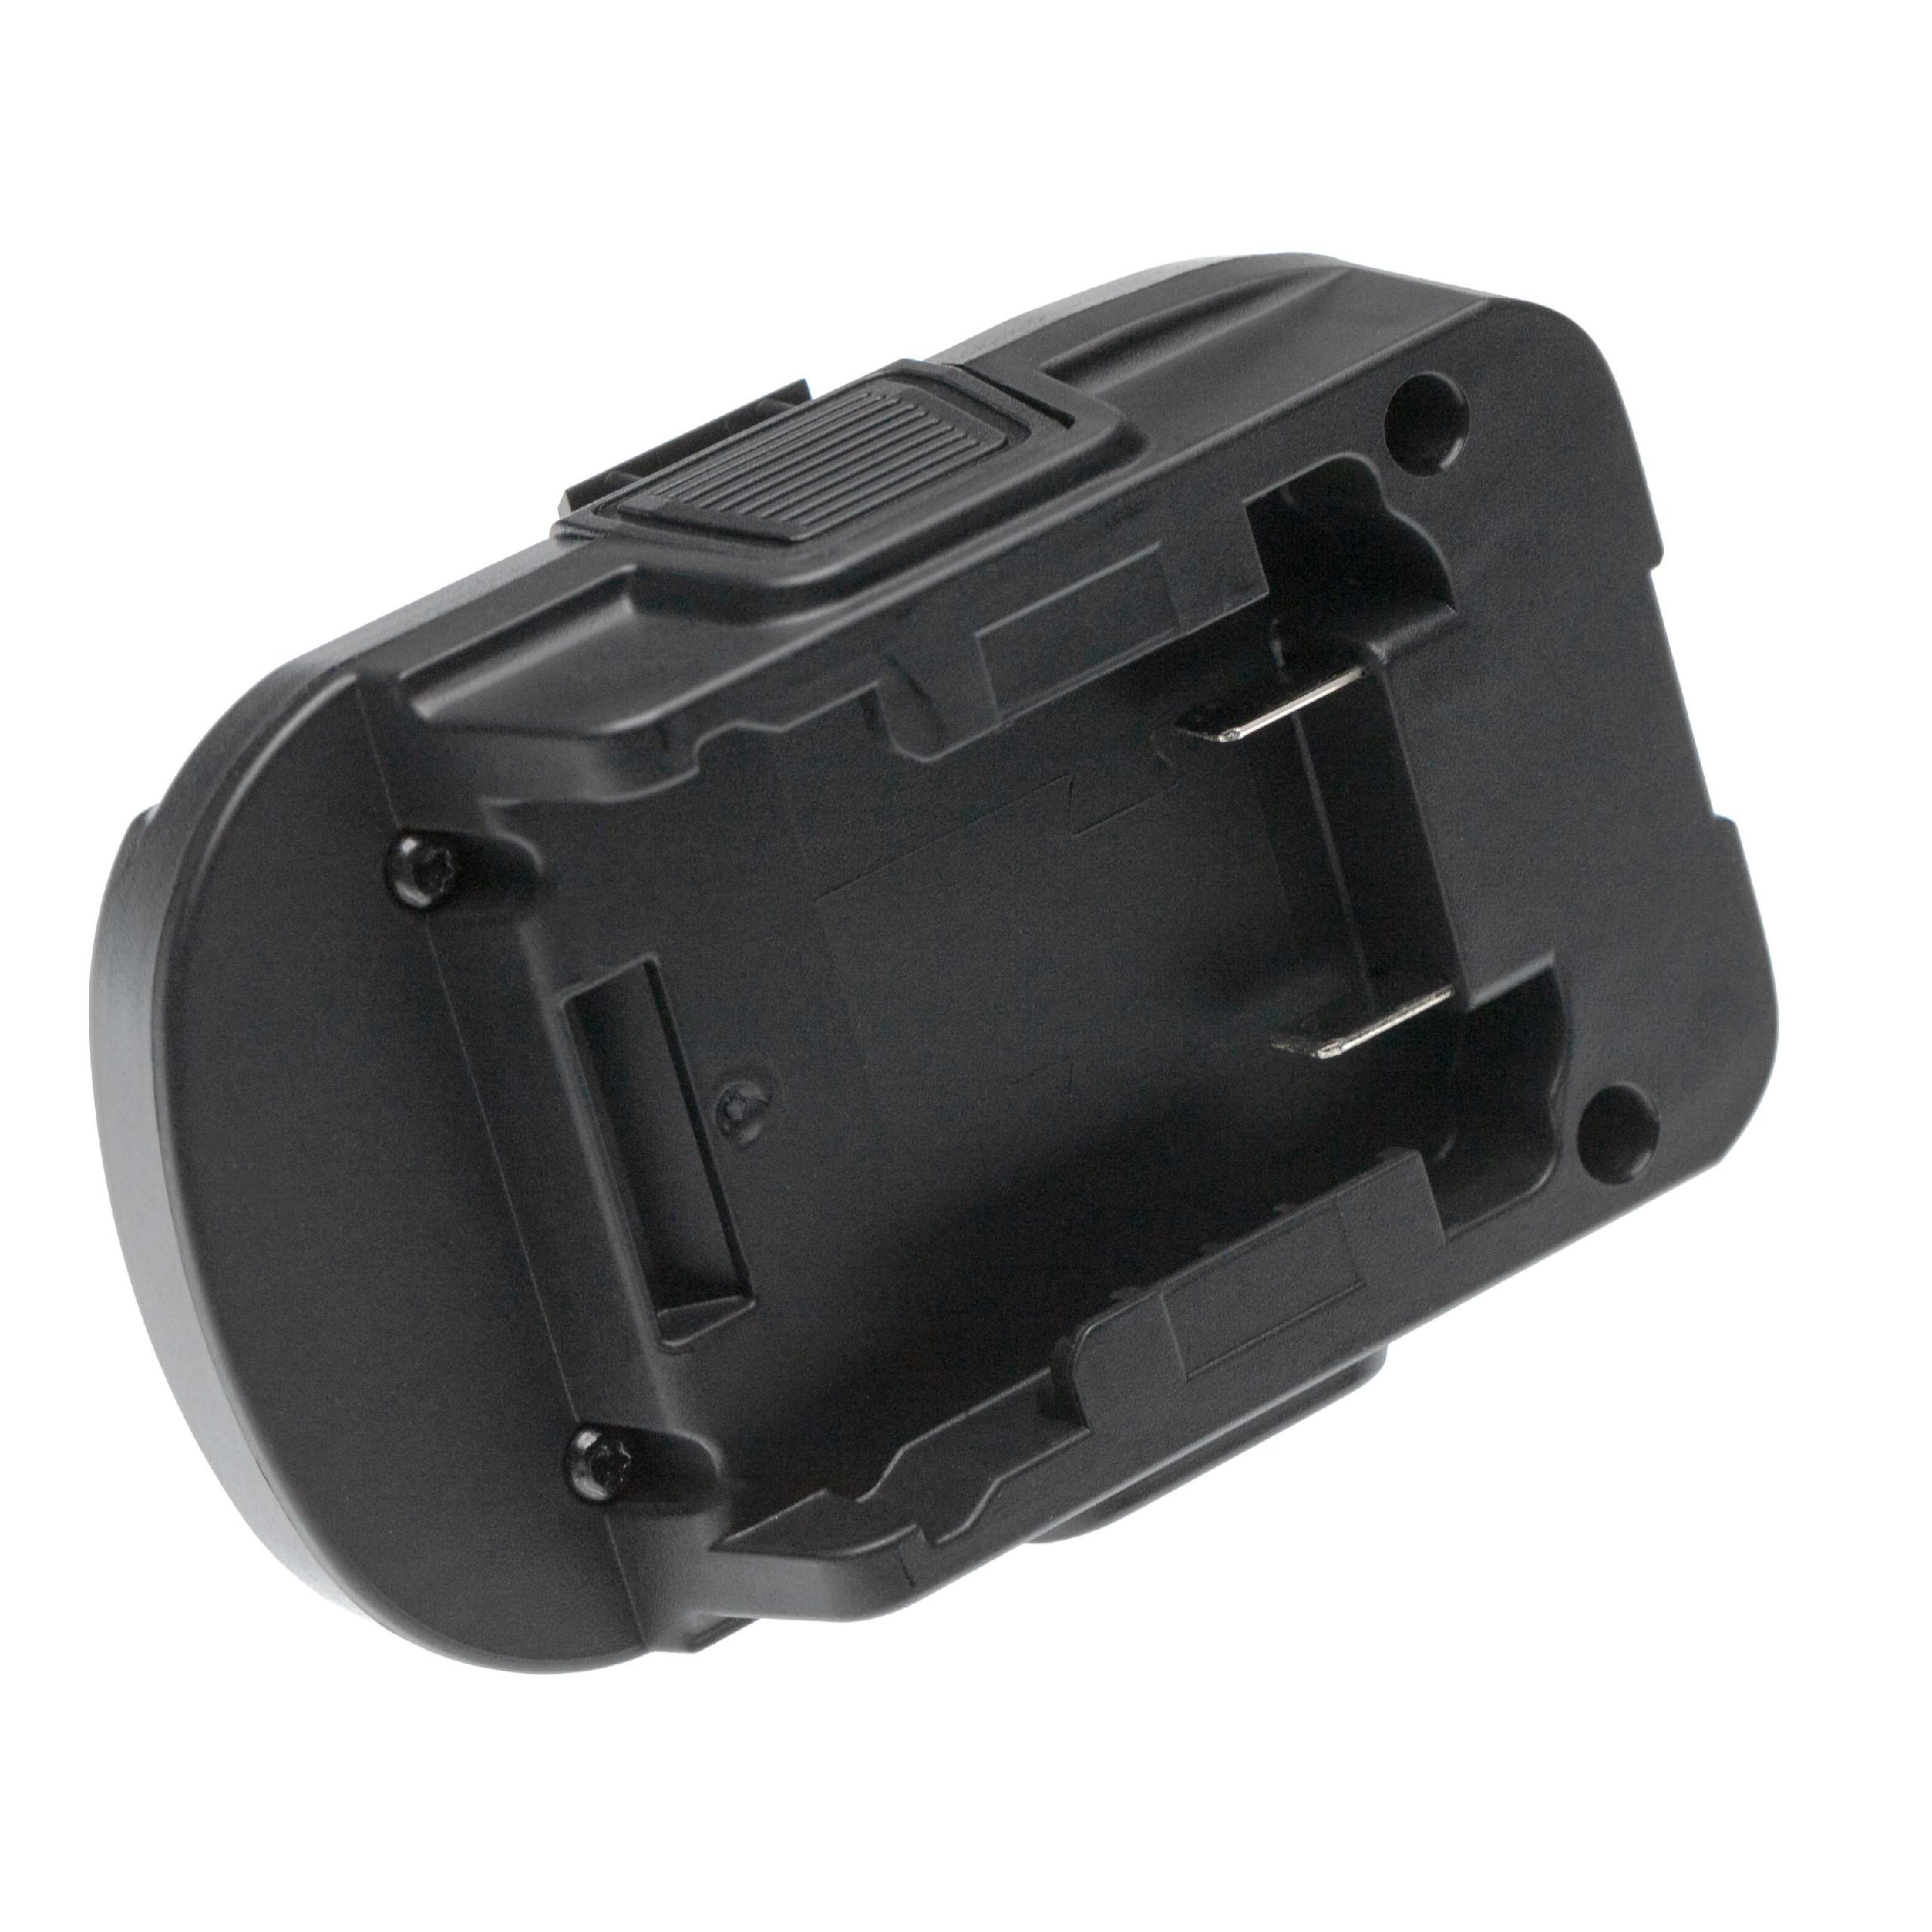 Battery Adapter suitable for DeWalt & Milwaukee Tool - 20 V Li-Ion to 18 V Ryobi